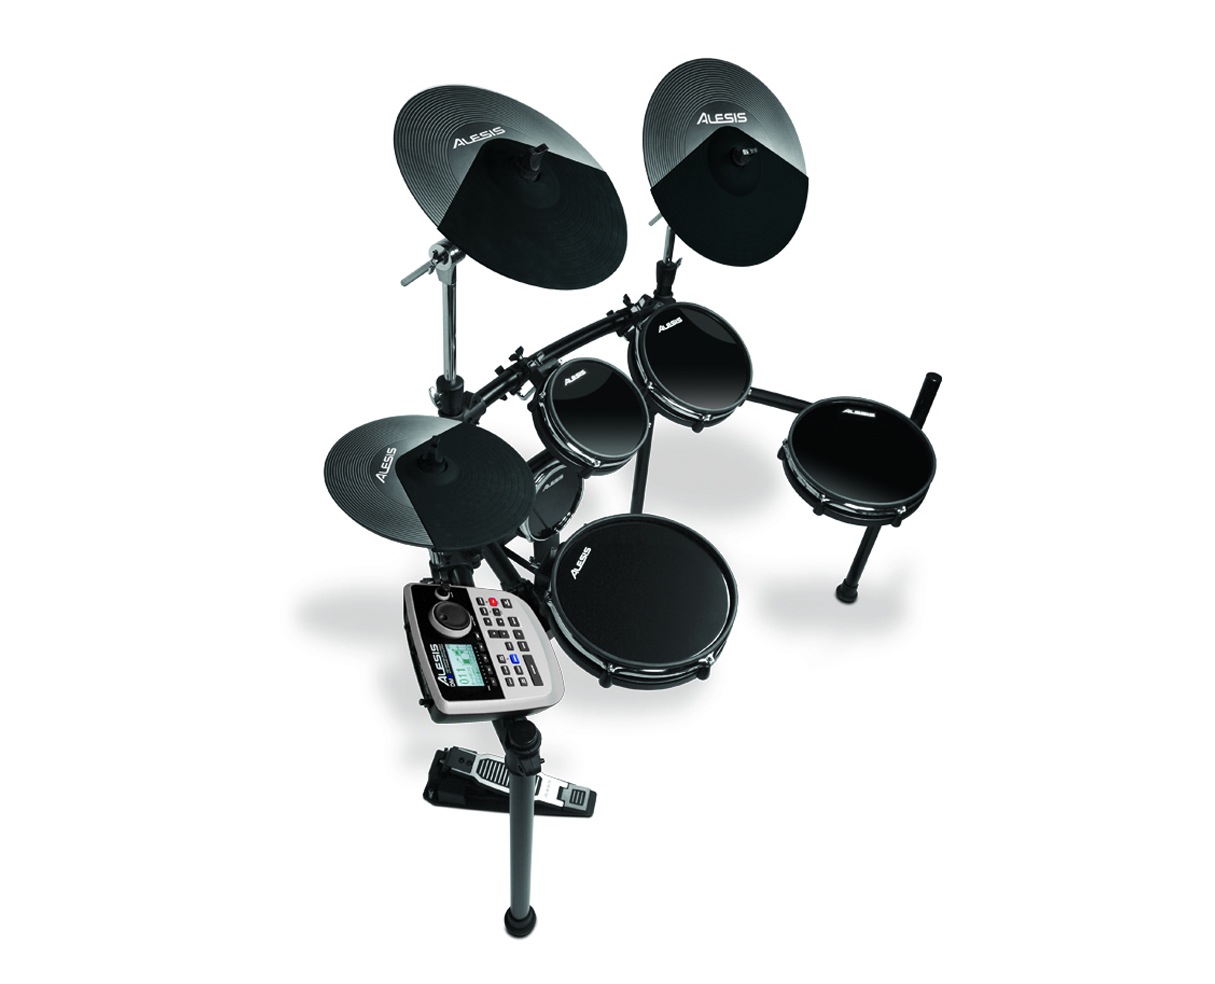 Alesis DM8 DM 8 Pro Kit Electronic Drum Set